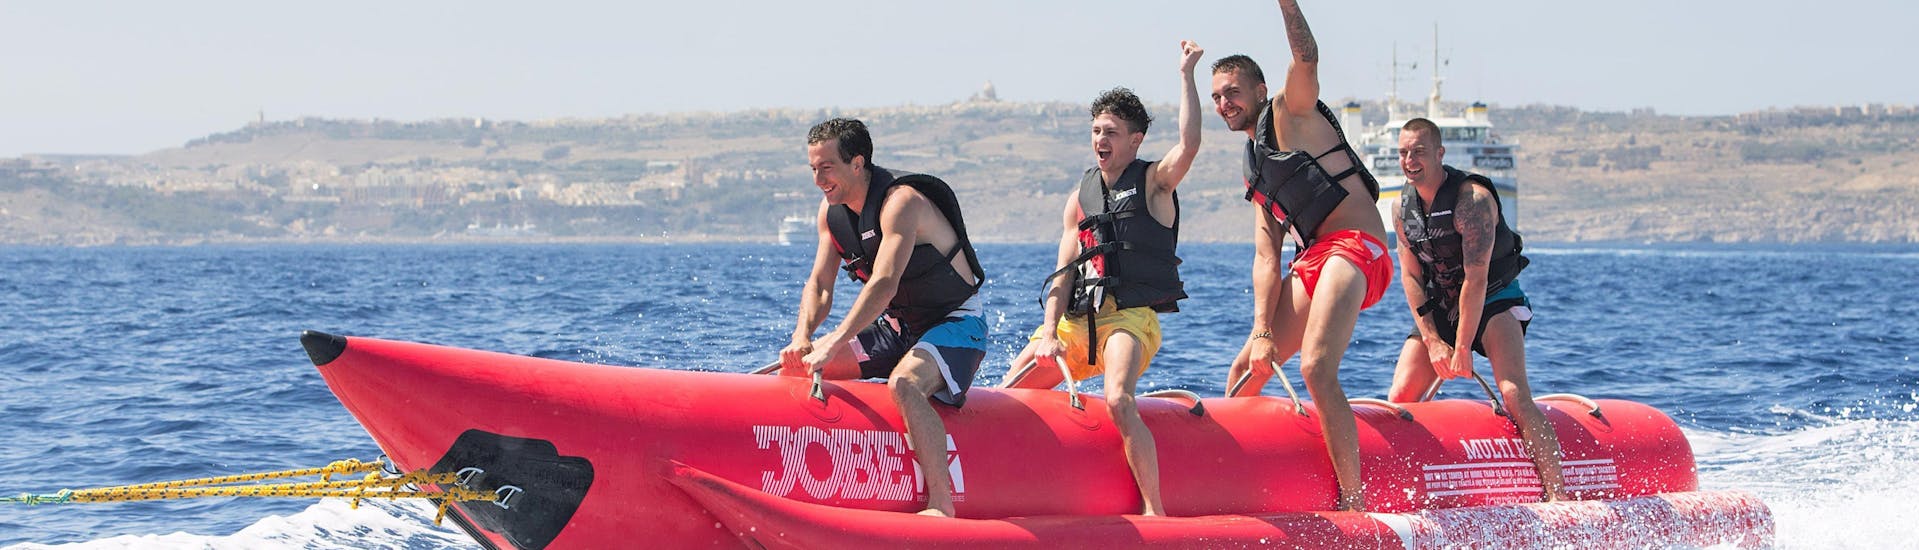 Groepsfoto tijdens de bananenboot rit in Armier Bay Beach met Palm Beach Water Sports Malta.